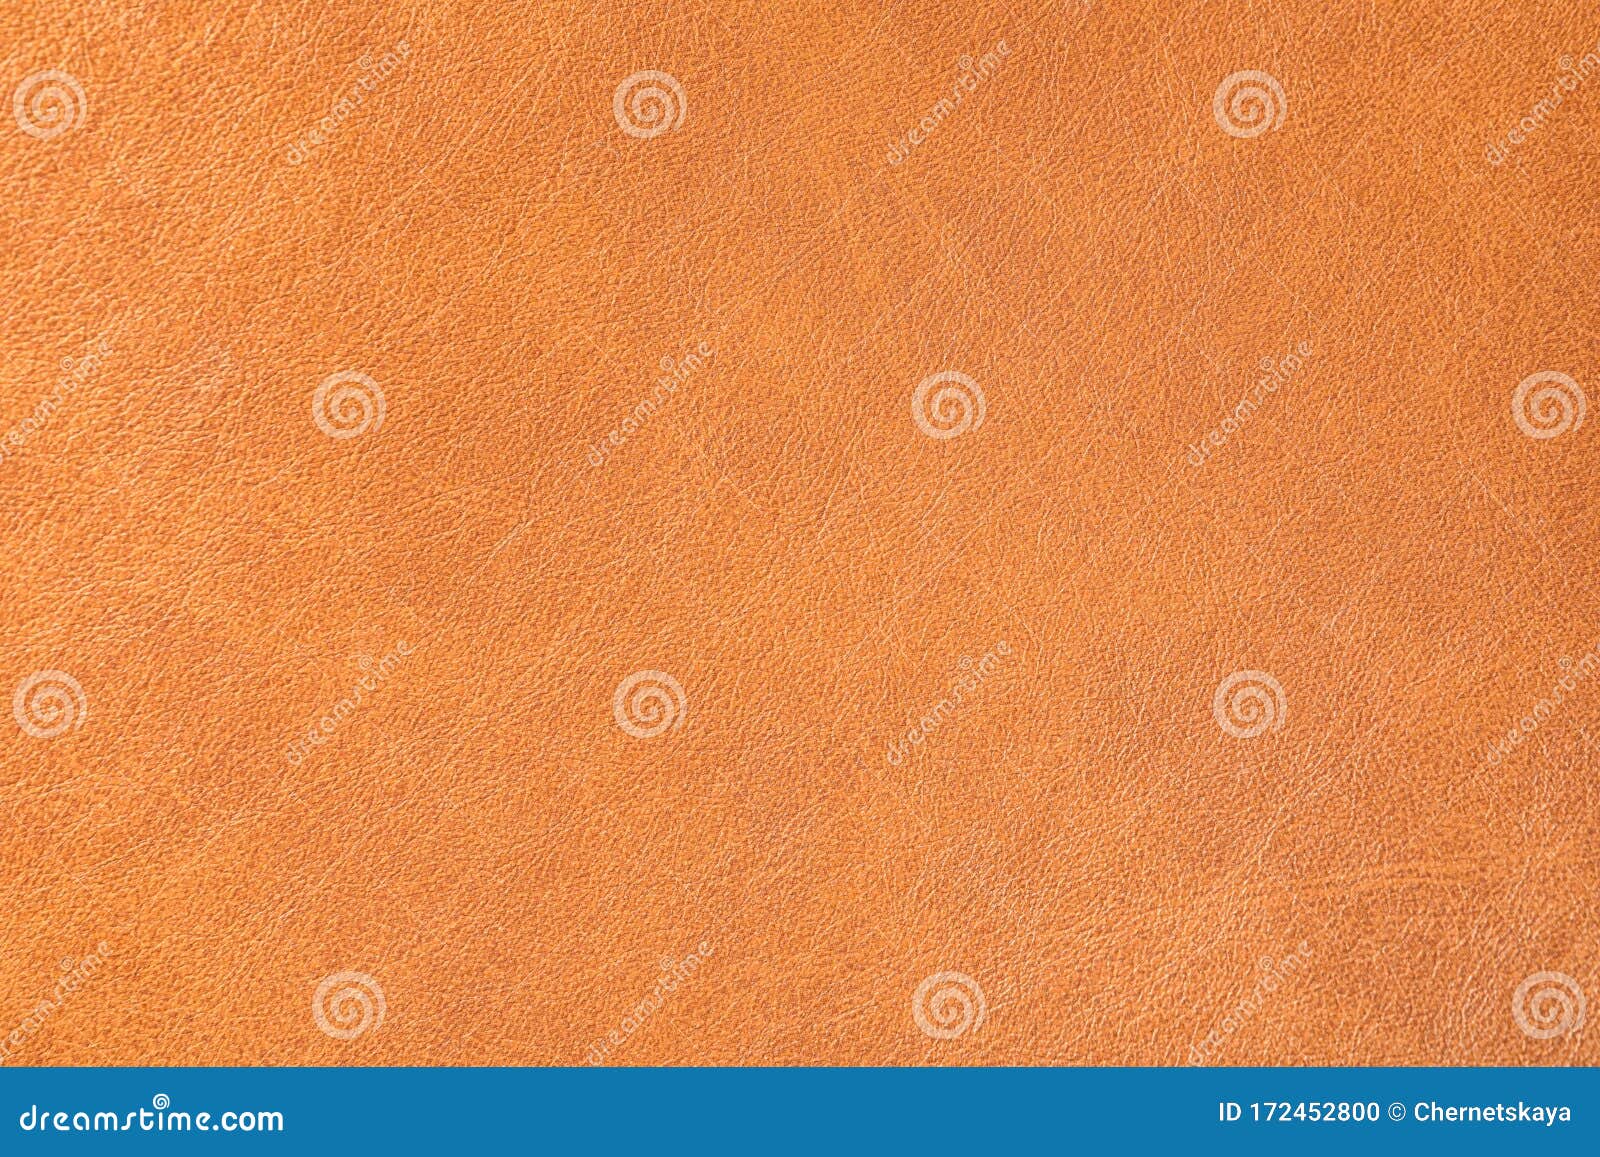 Texture Of Orange Leather As Background Stock Photo Image Of Luxury